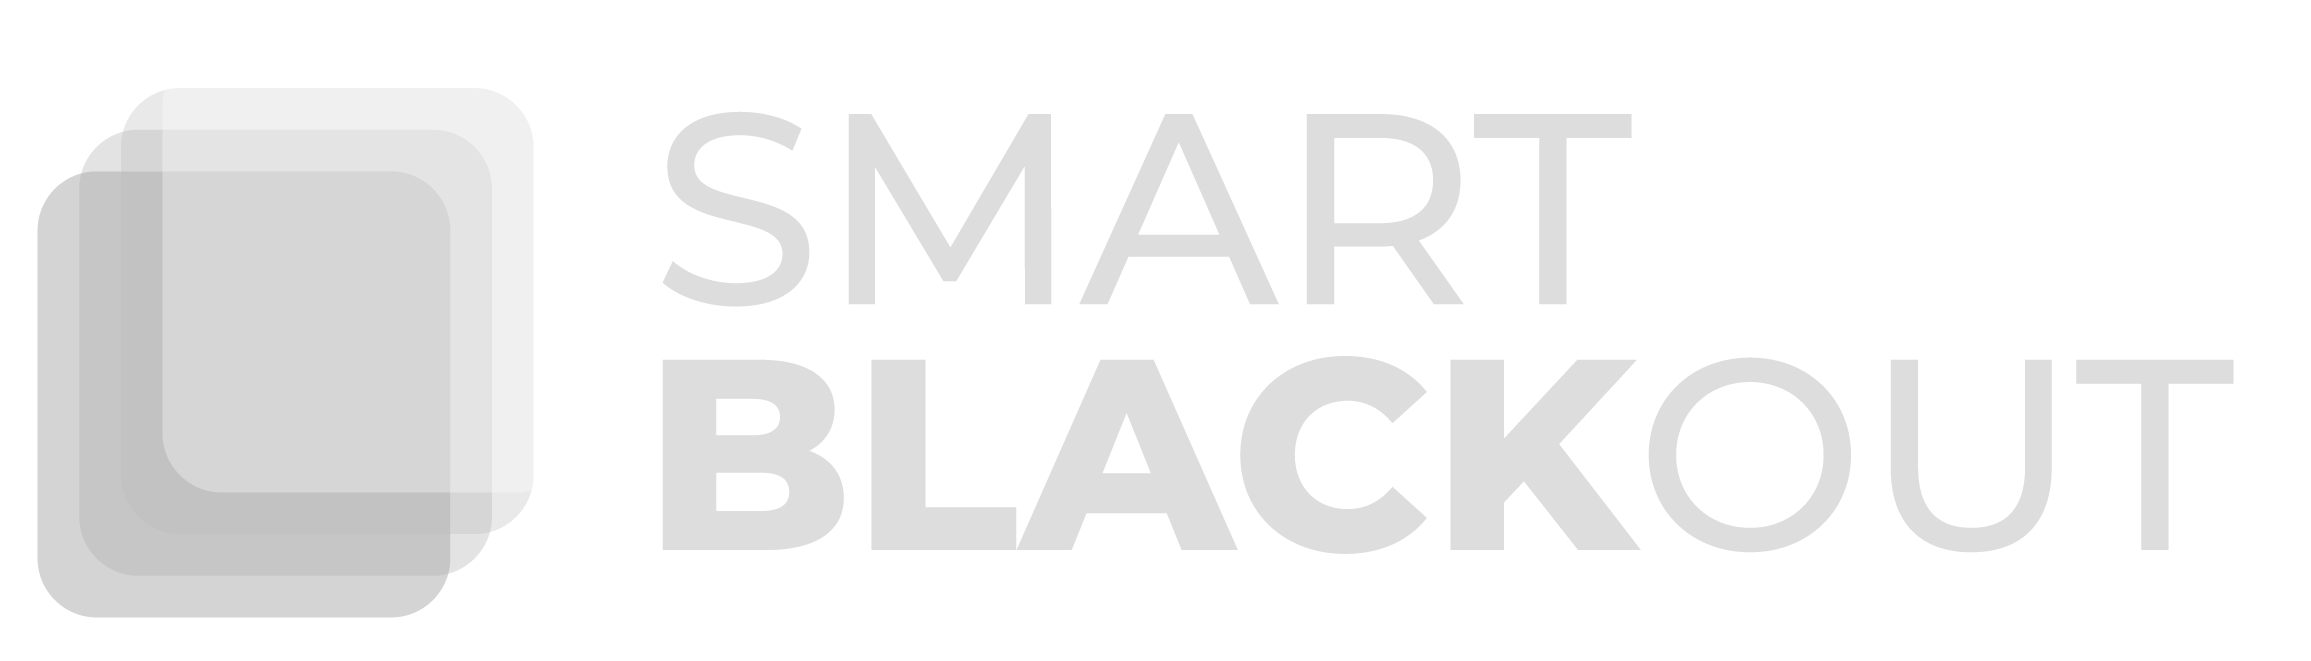 Smart Blackout